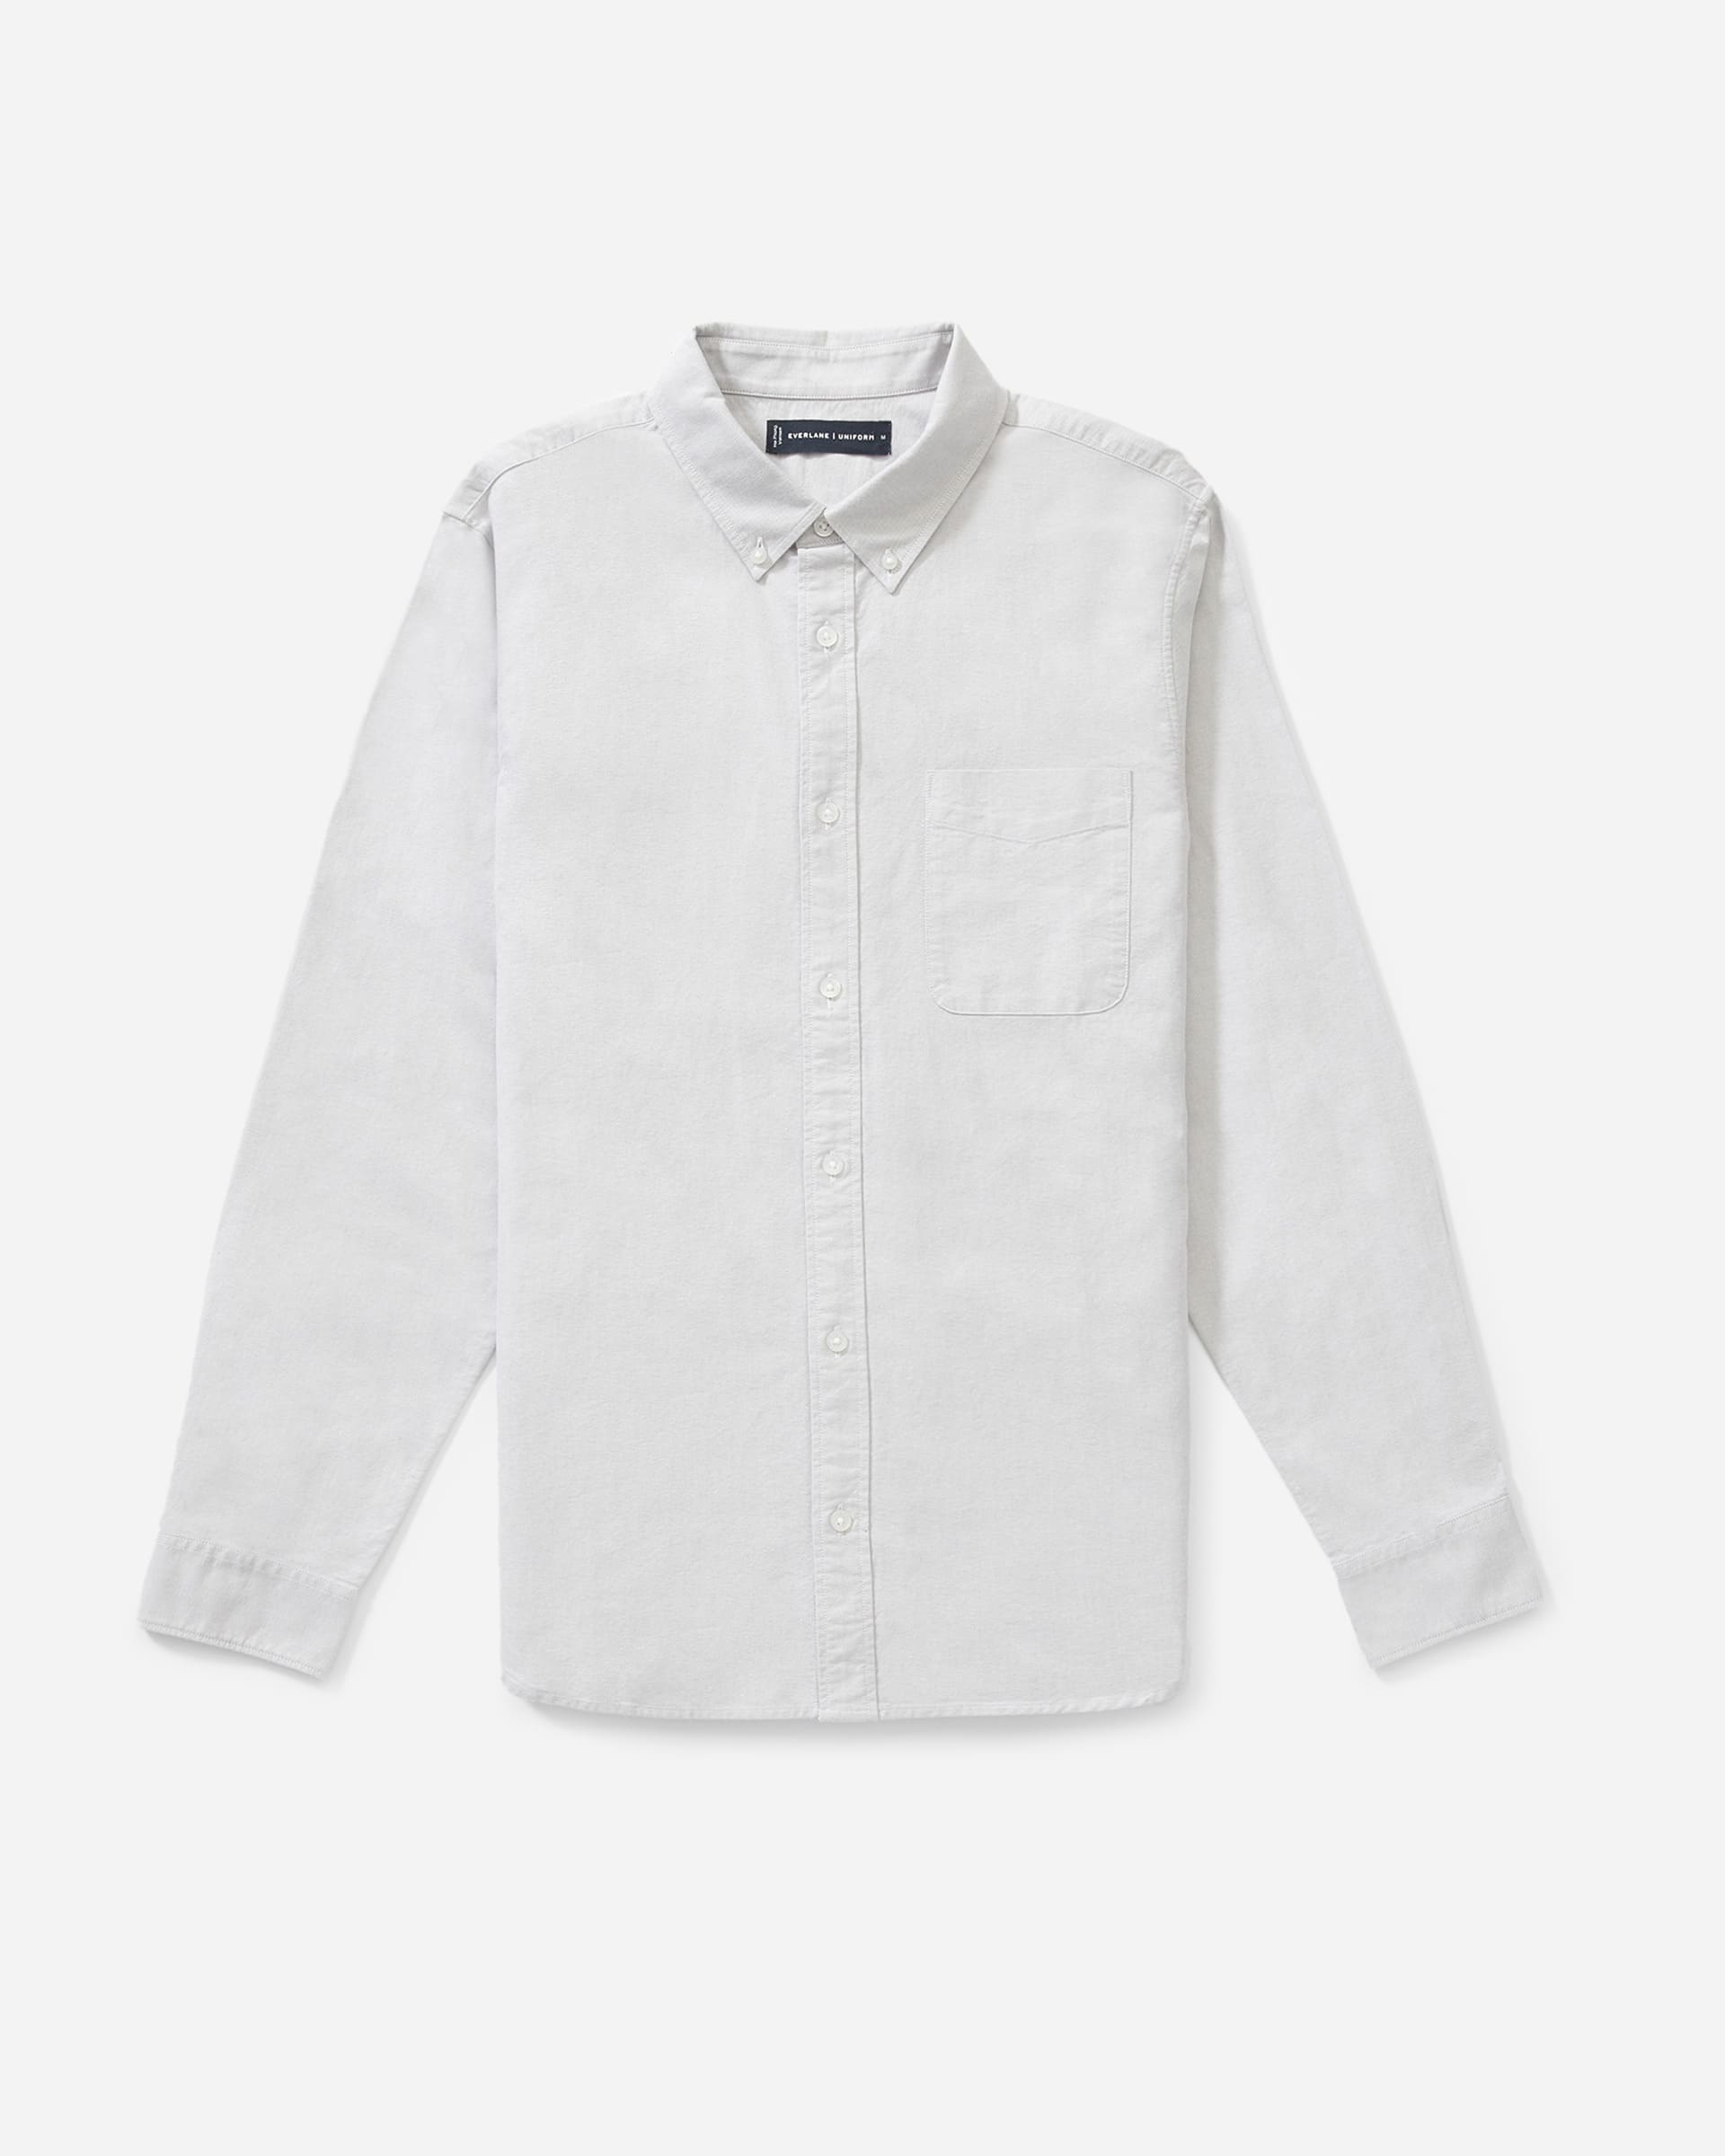 The Standard Fit Japanese Oxford Shirt | Uniform Grey – Everlane